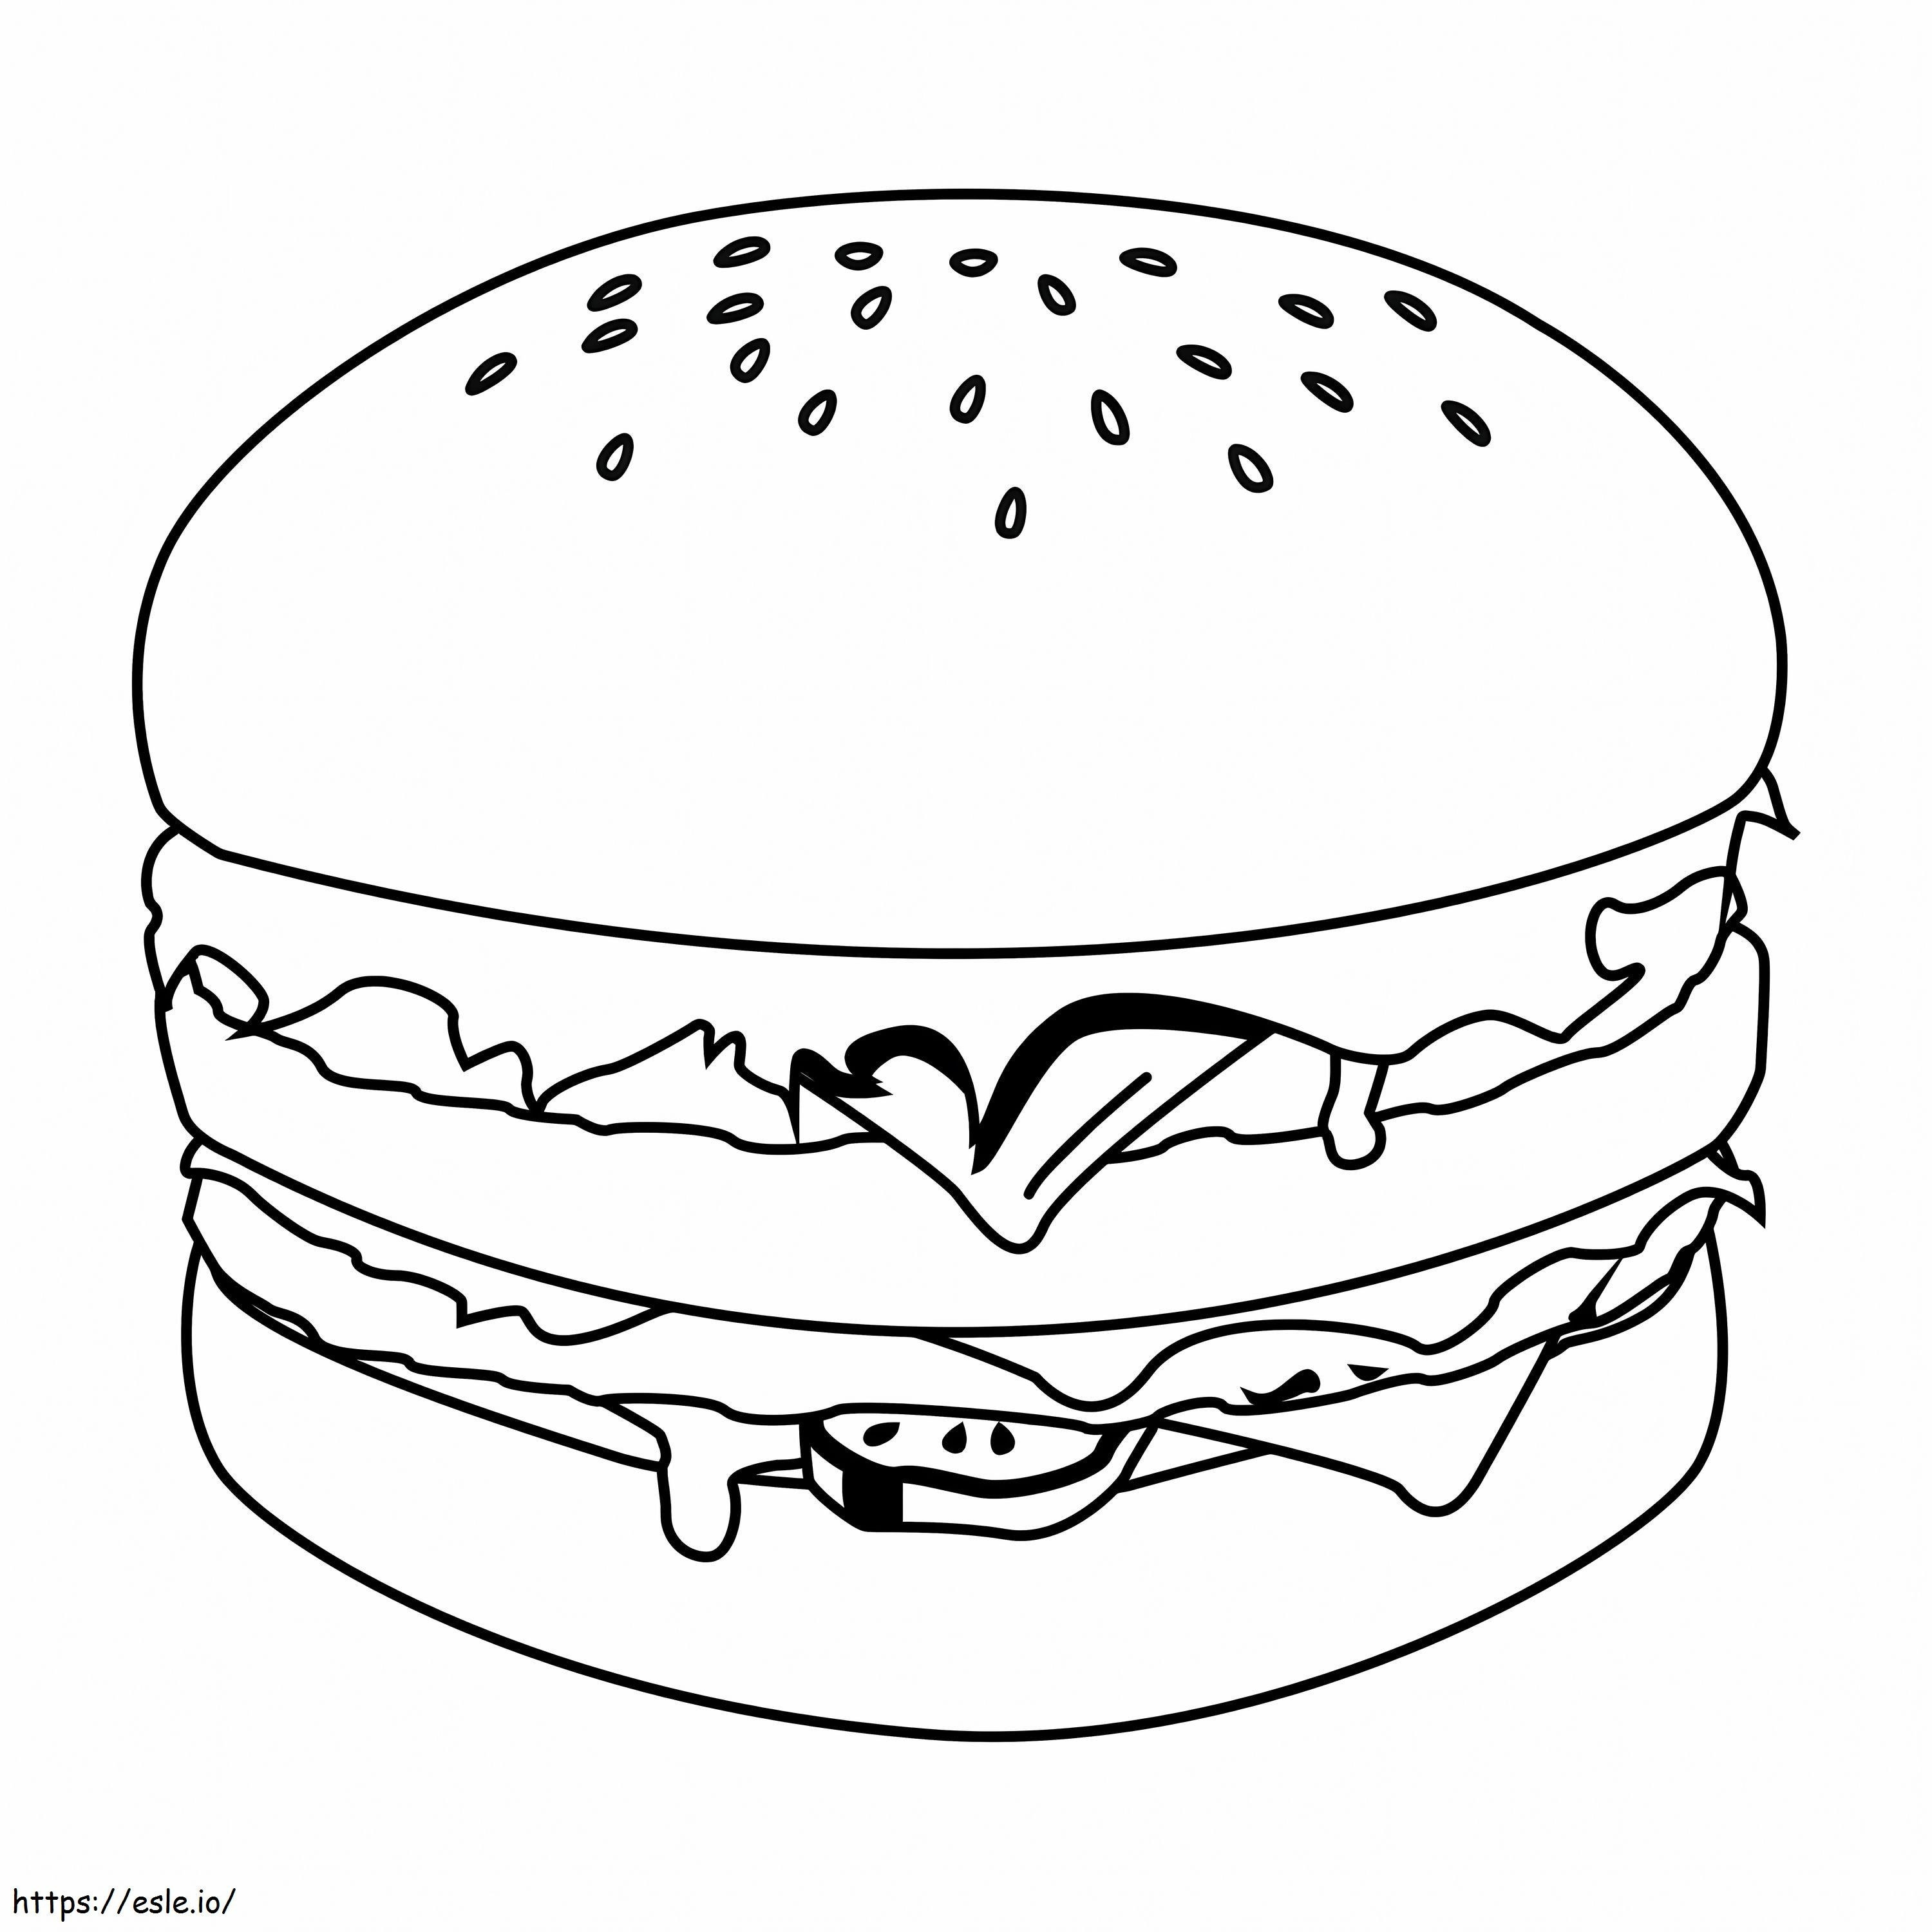 Burgernya enak Gambar Mewarnai